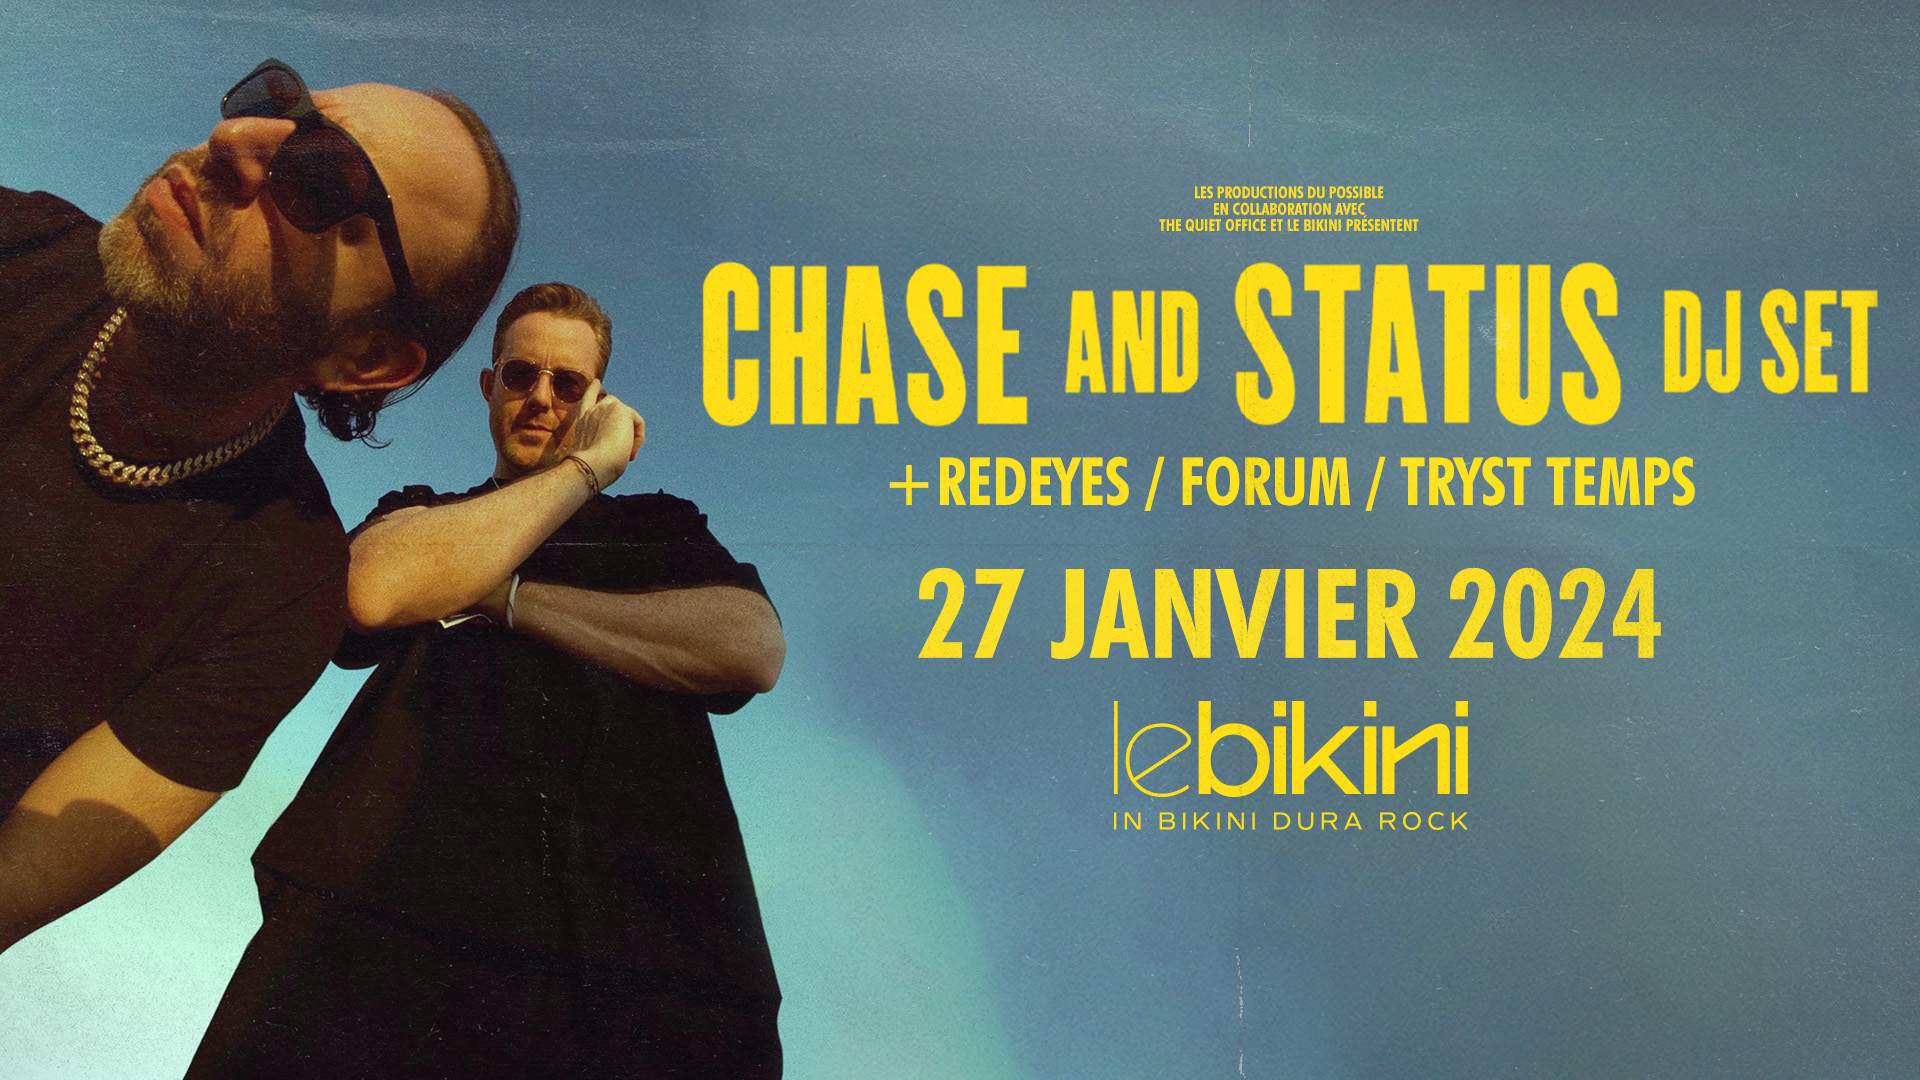 Chase and Status (DJ Set) - フライヤー表